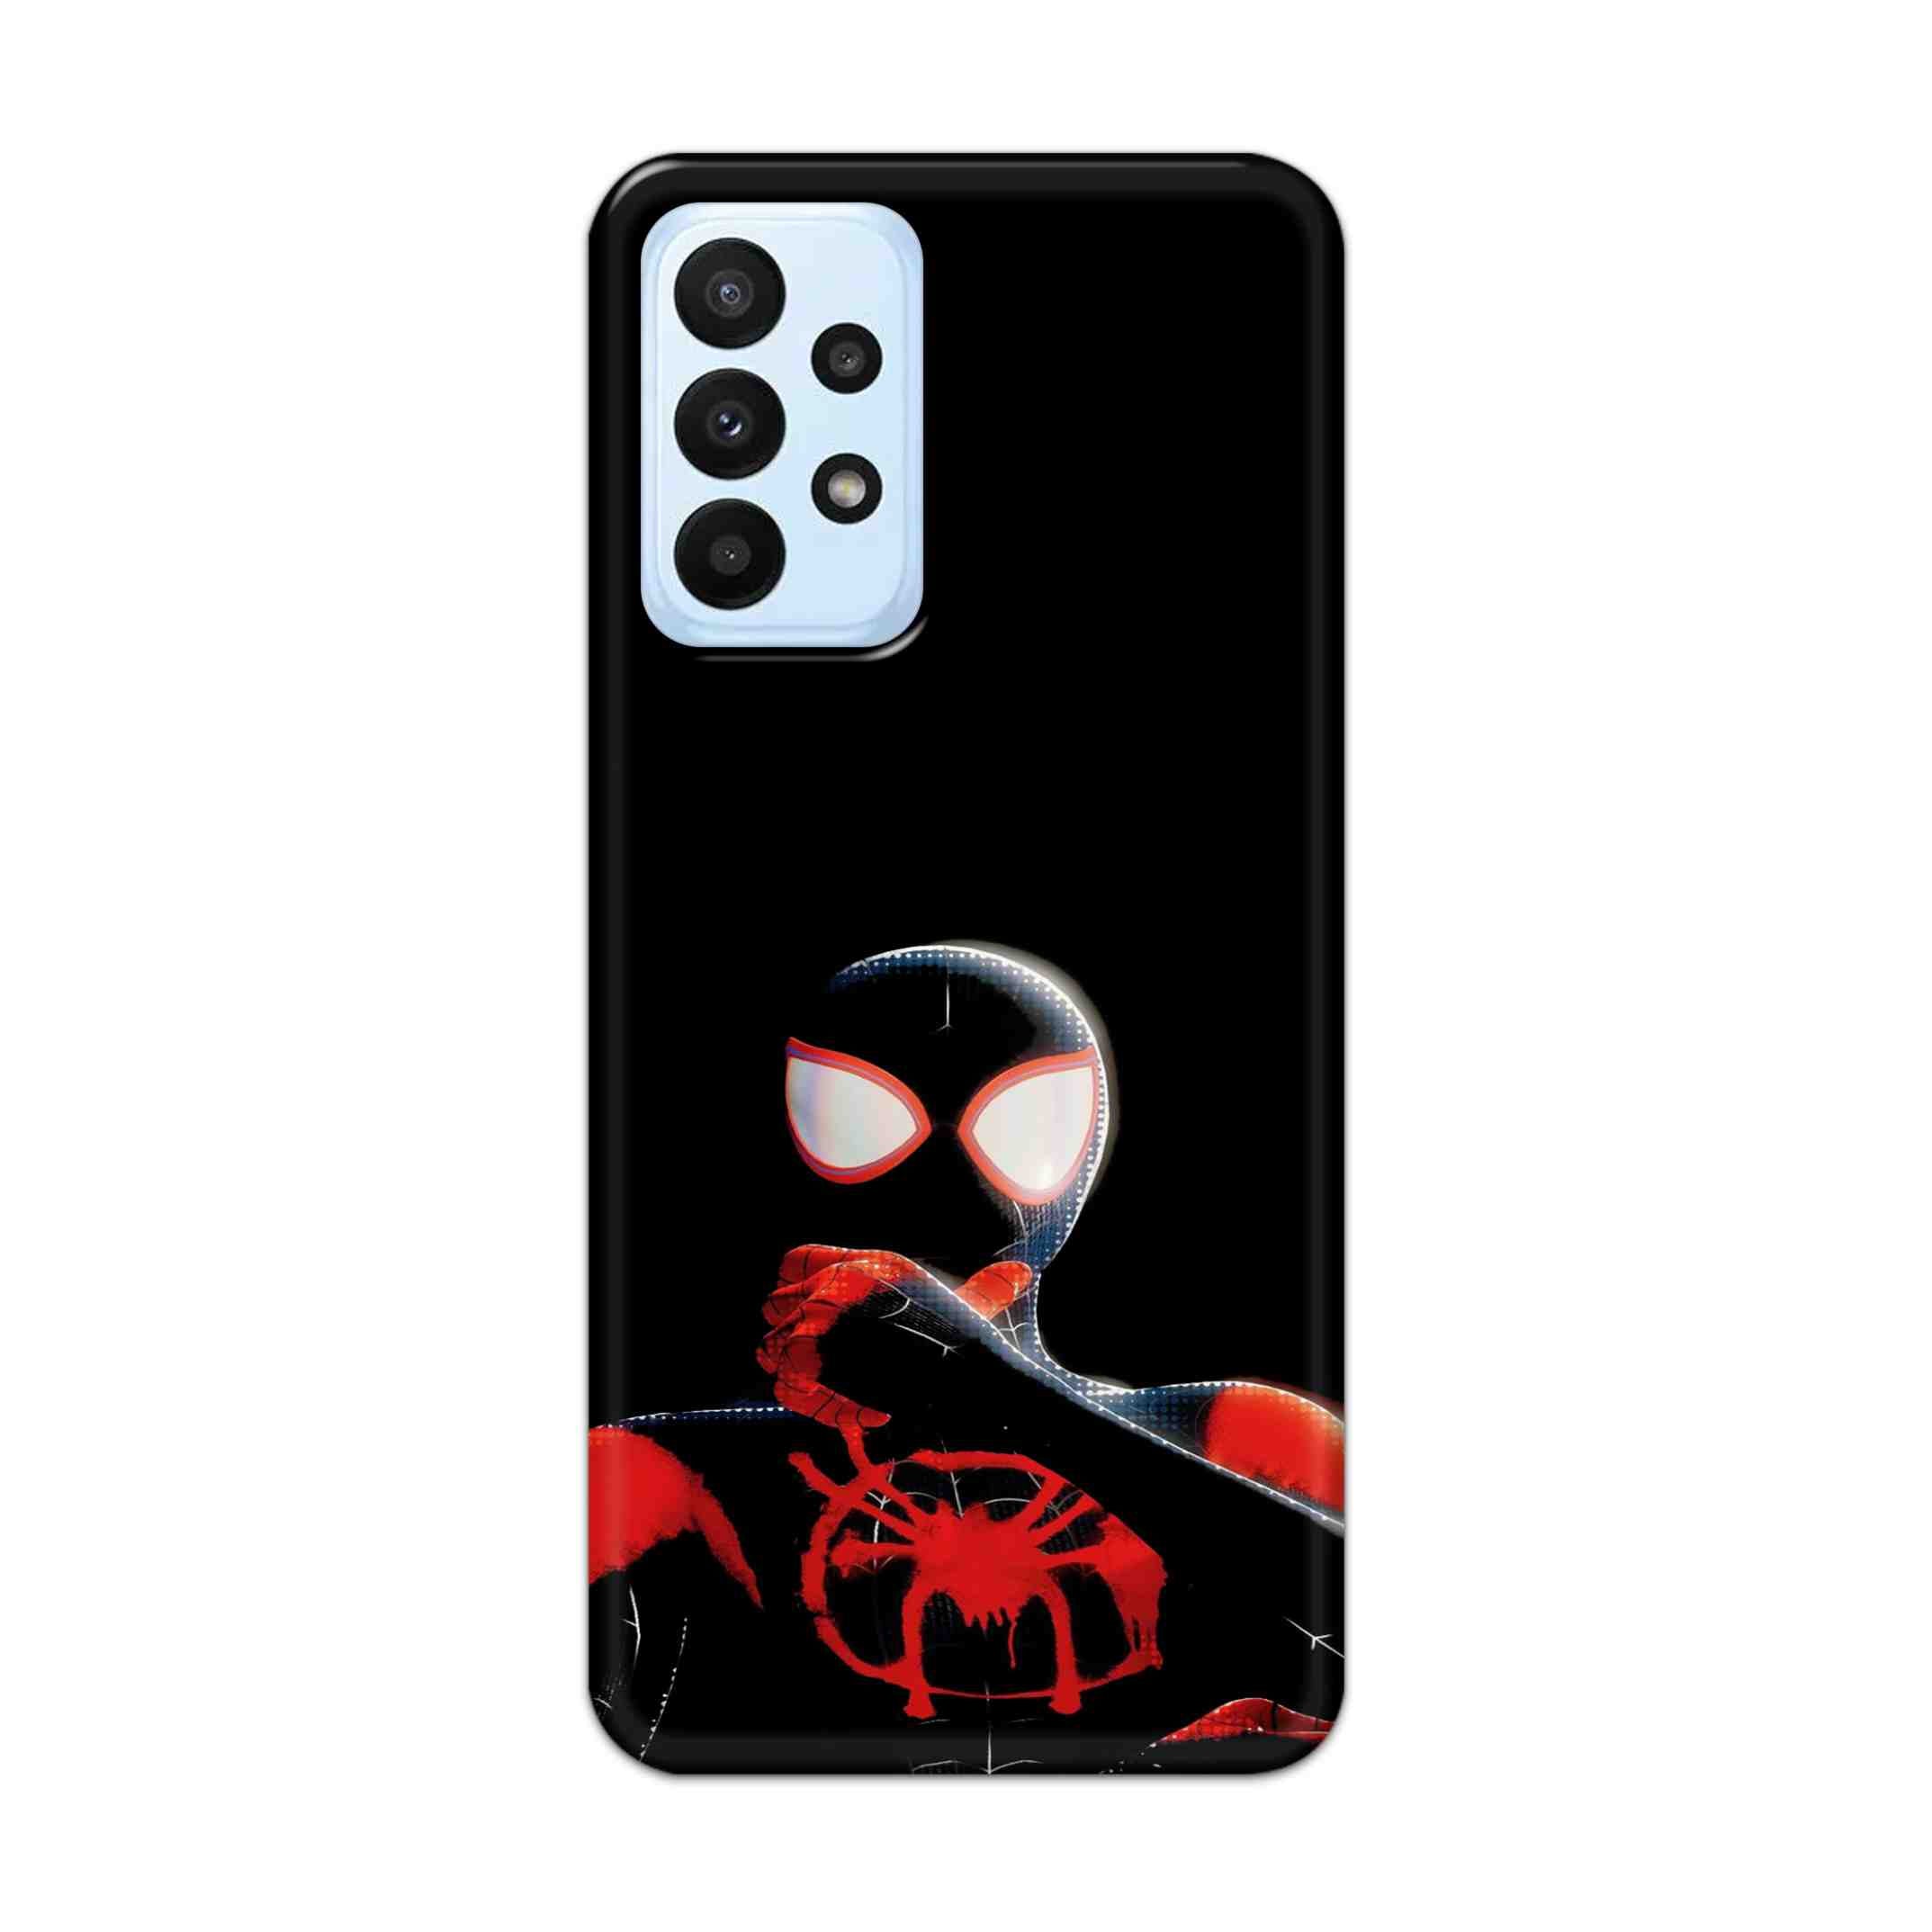 Buy Black Spiderman Hard Back Mobile Phone Case Cover For Samsung A23 Online